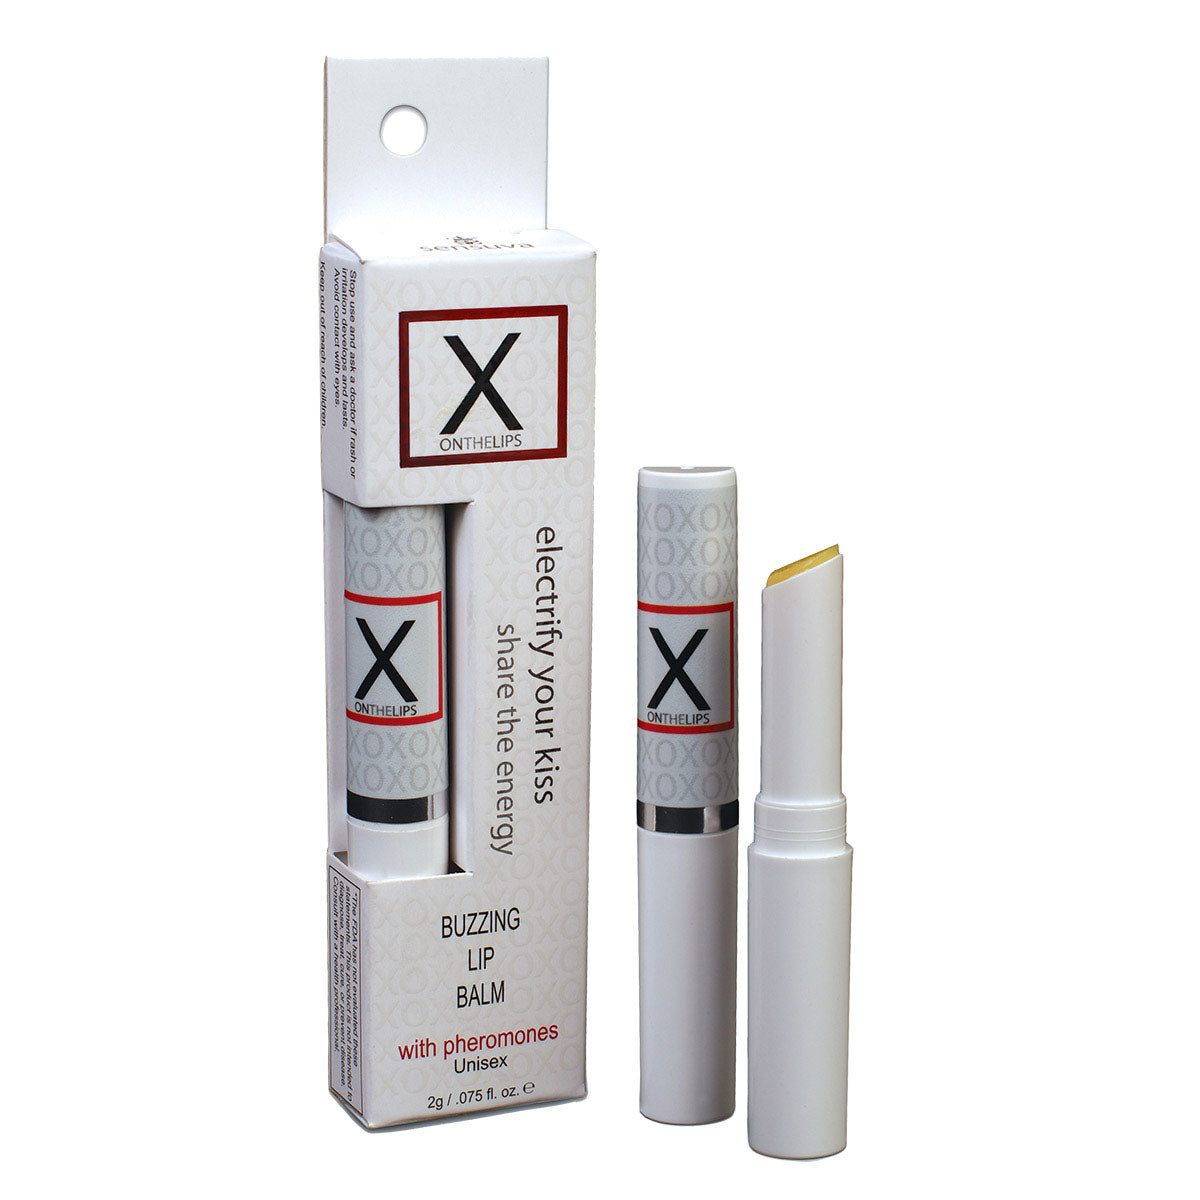 Sensuva X on the Lips - 2g – Assorted Flavors